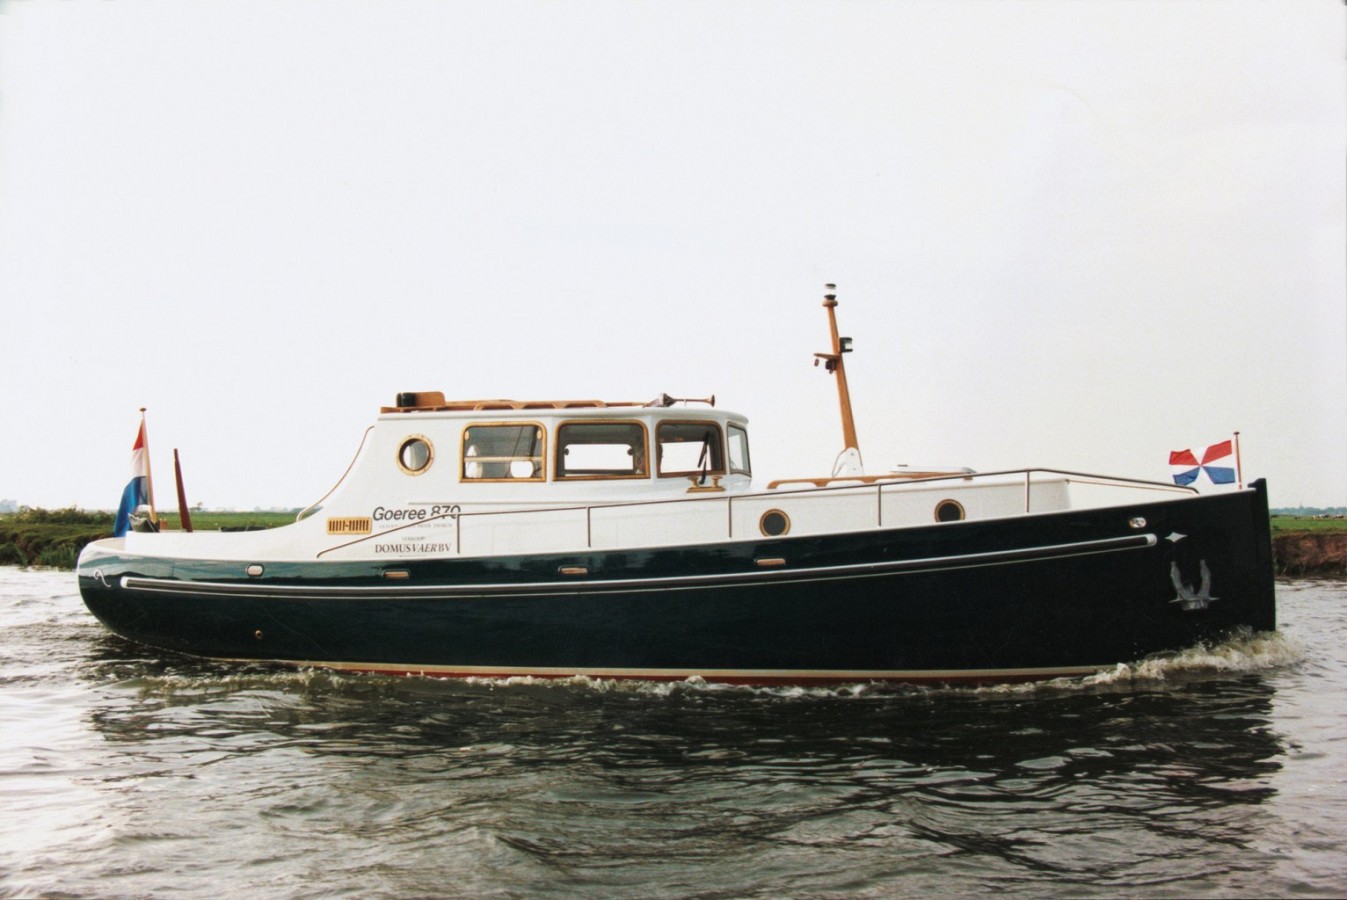 Goeree 870 Motor Yacht - Motor Sailer